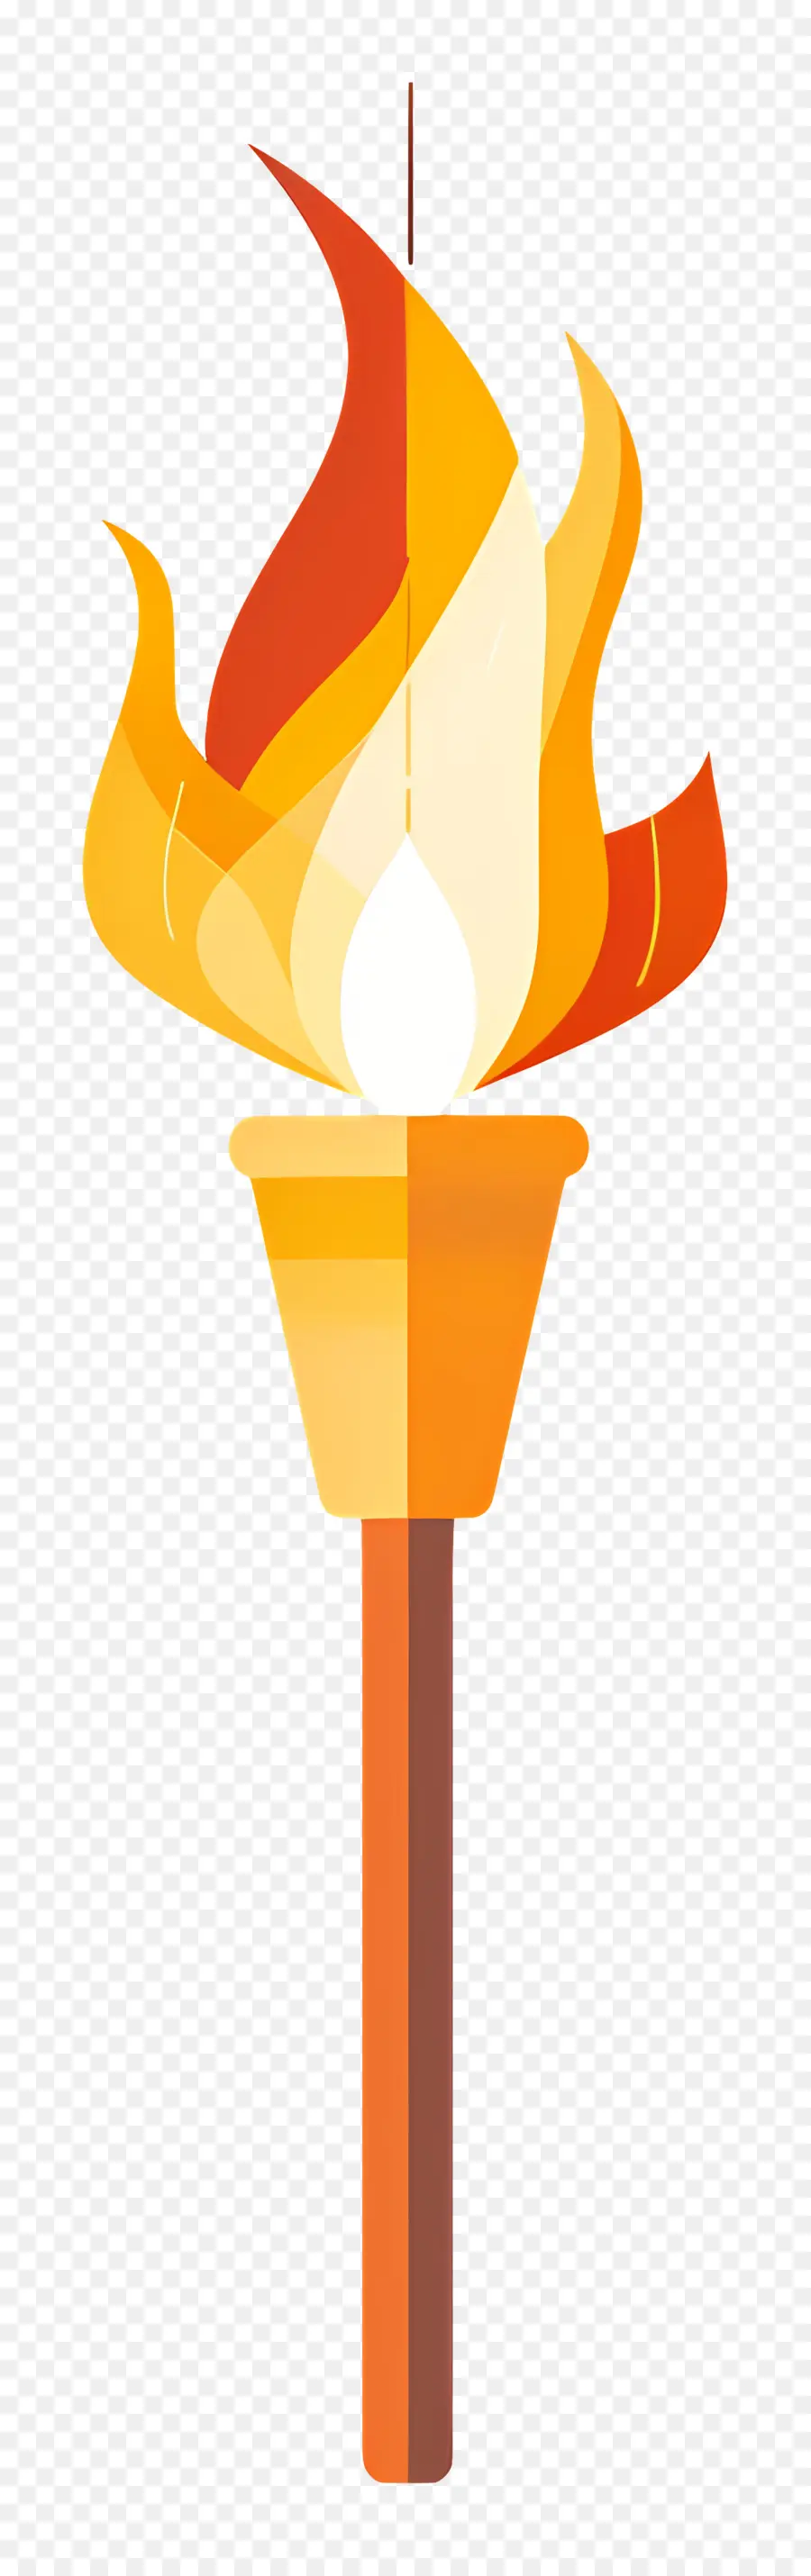 Олимпийский факел，огонь факела PNG